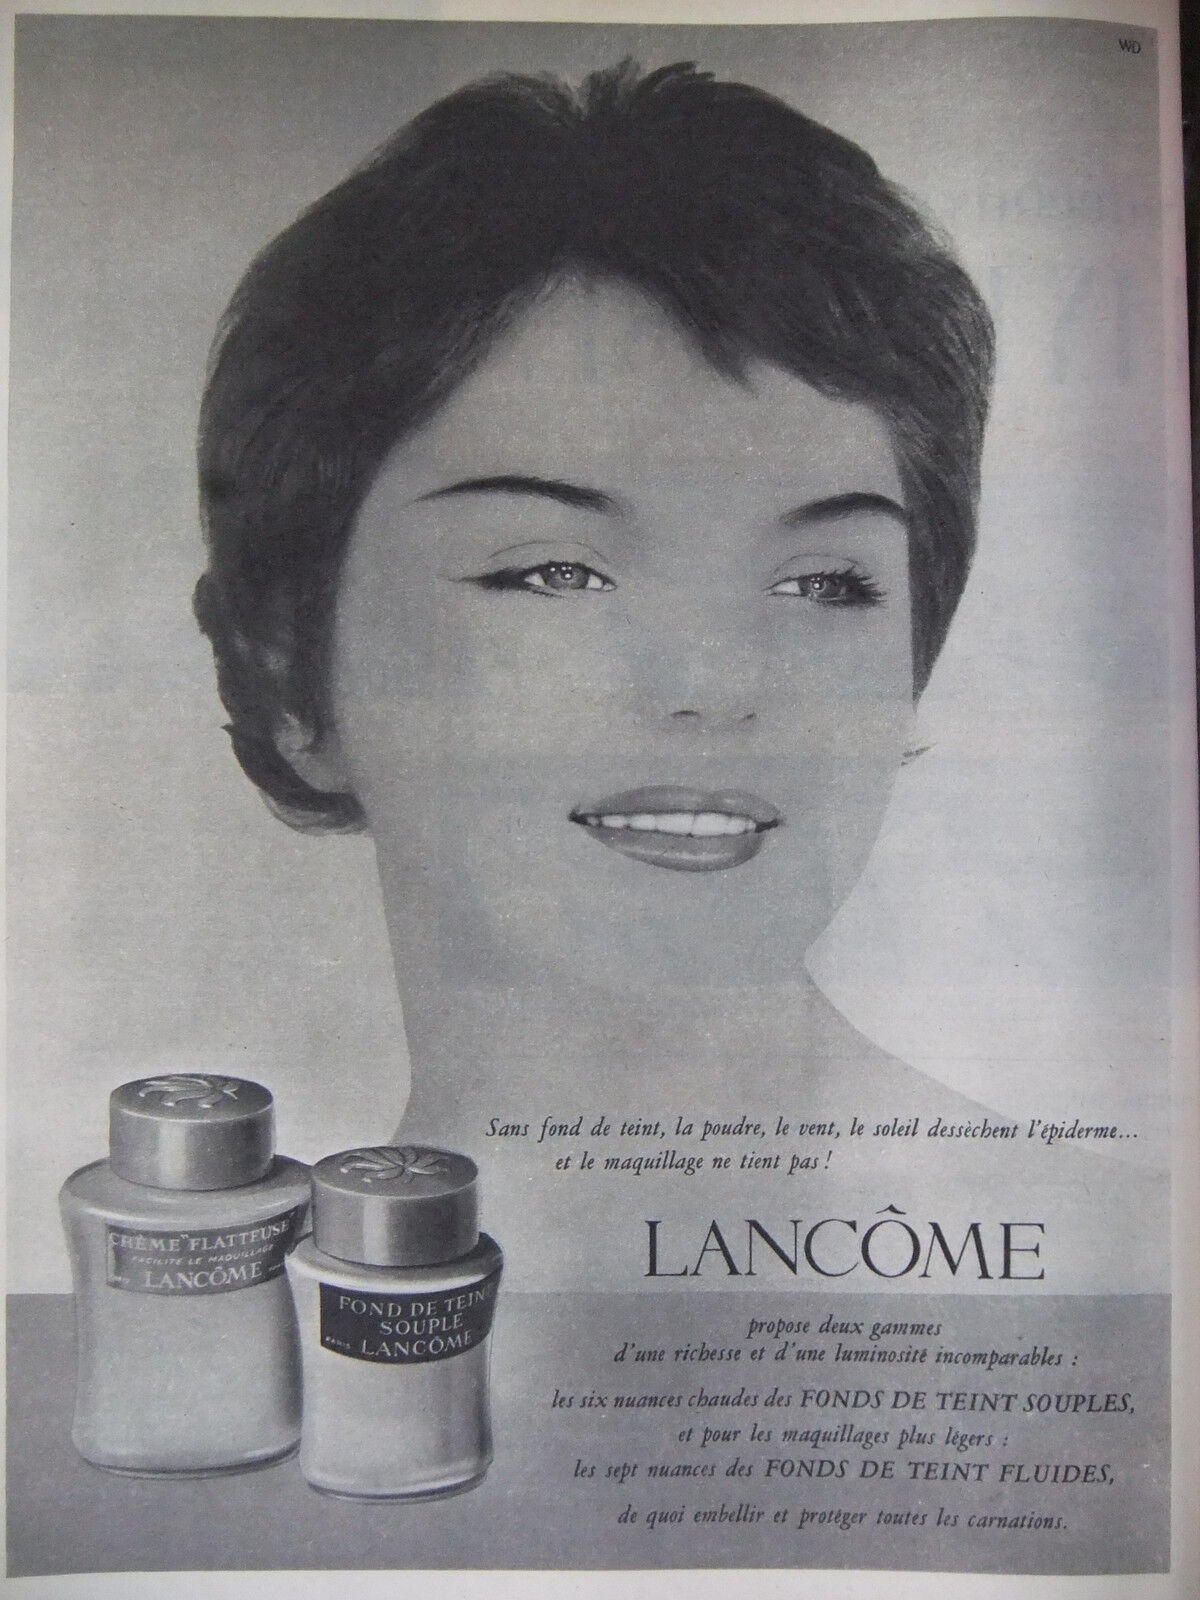 1959 LANCÔME SOFT OR FLUID FOUNDATION ADVERTISING - ADVERTISING